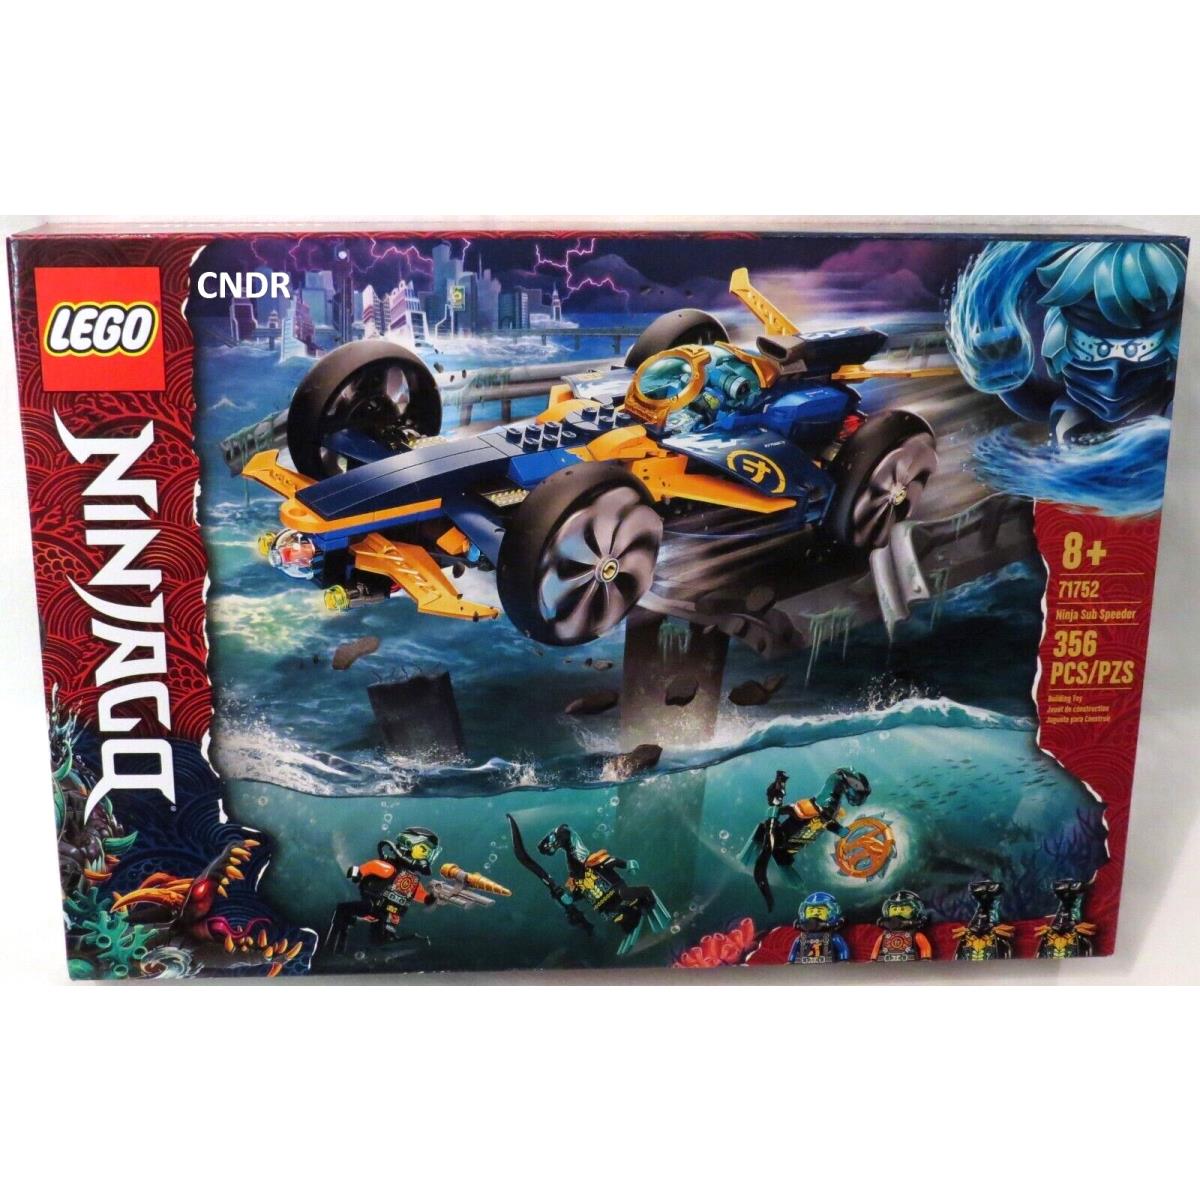 Lego Ninjago S14 Seabound Set 71752 Ninja Sub Speeder w/4 Minifigures Car